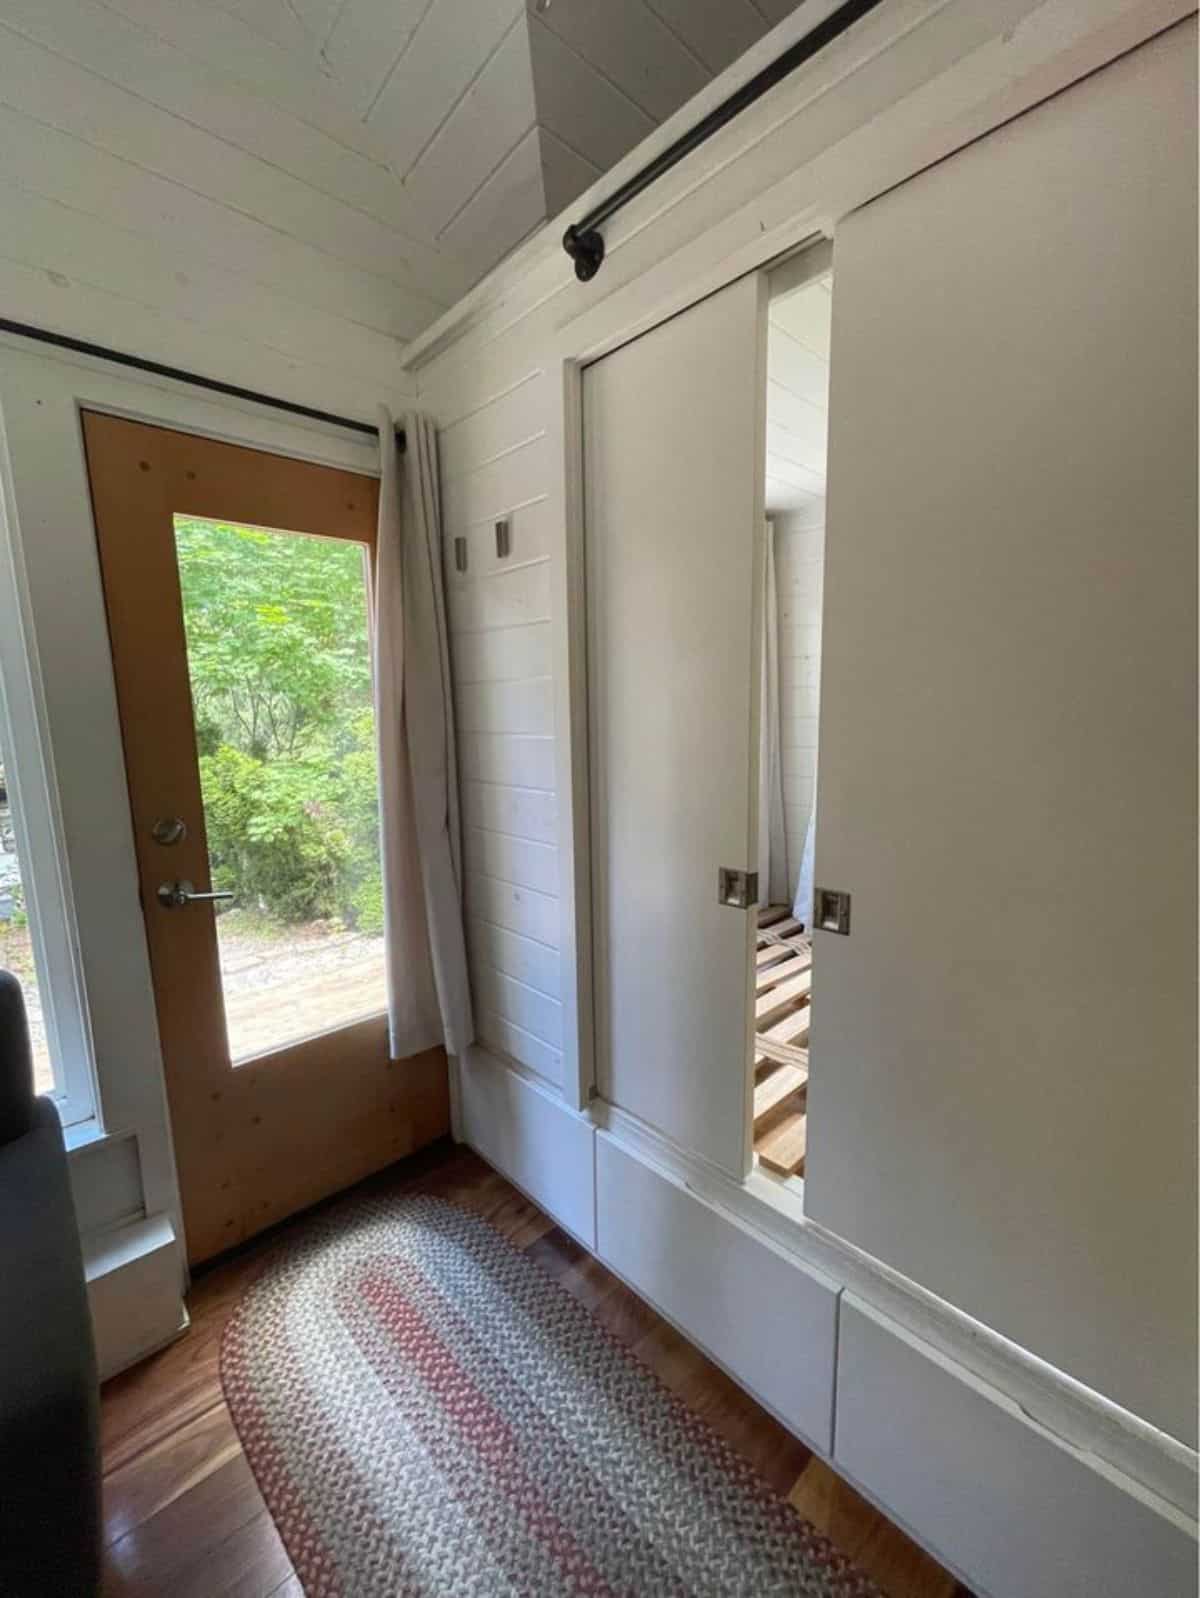 sliding door of main floor bedroom and main entrance glass door of tiny home with lot